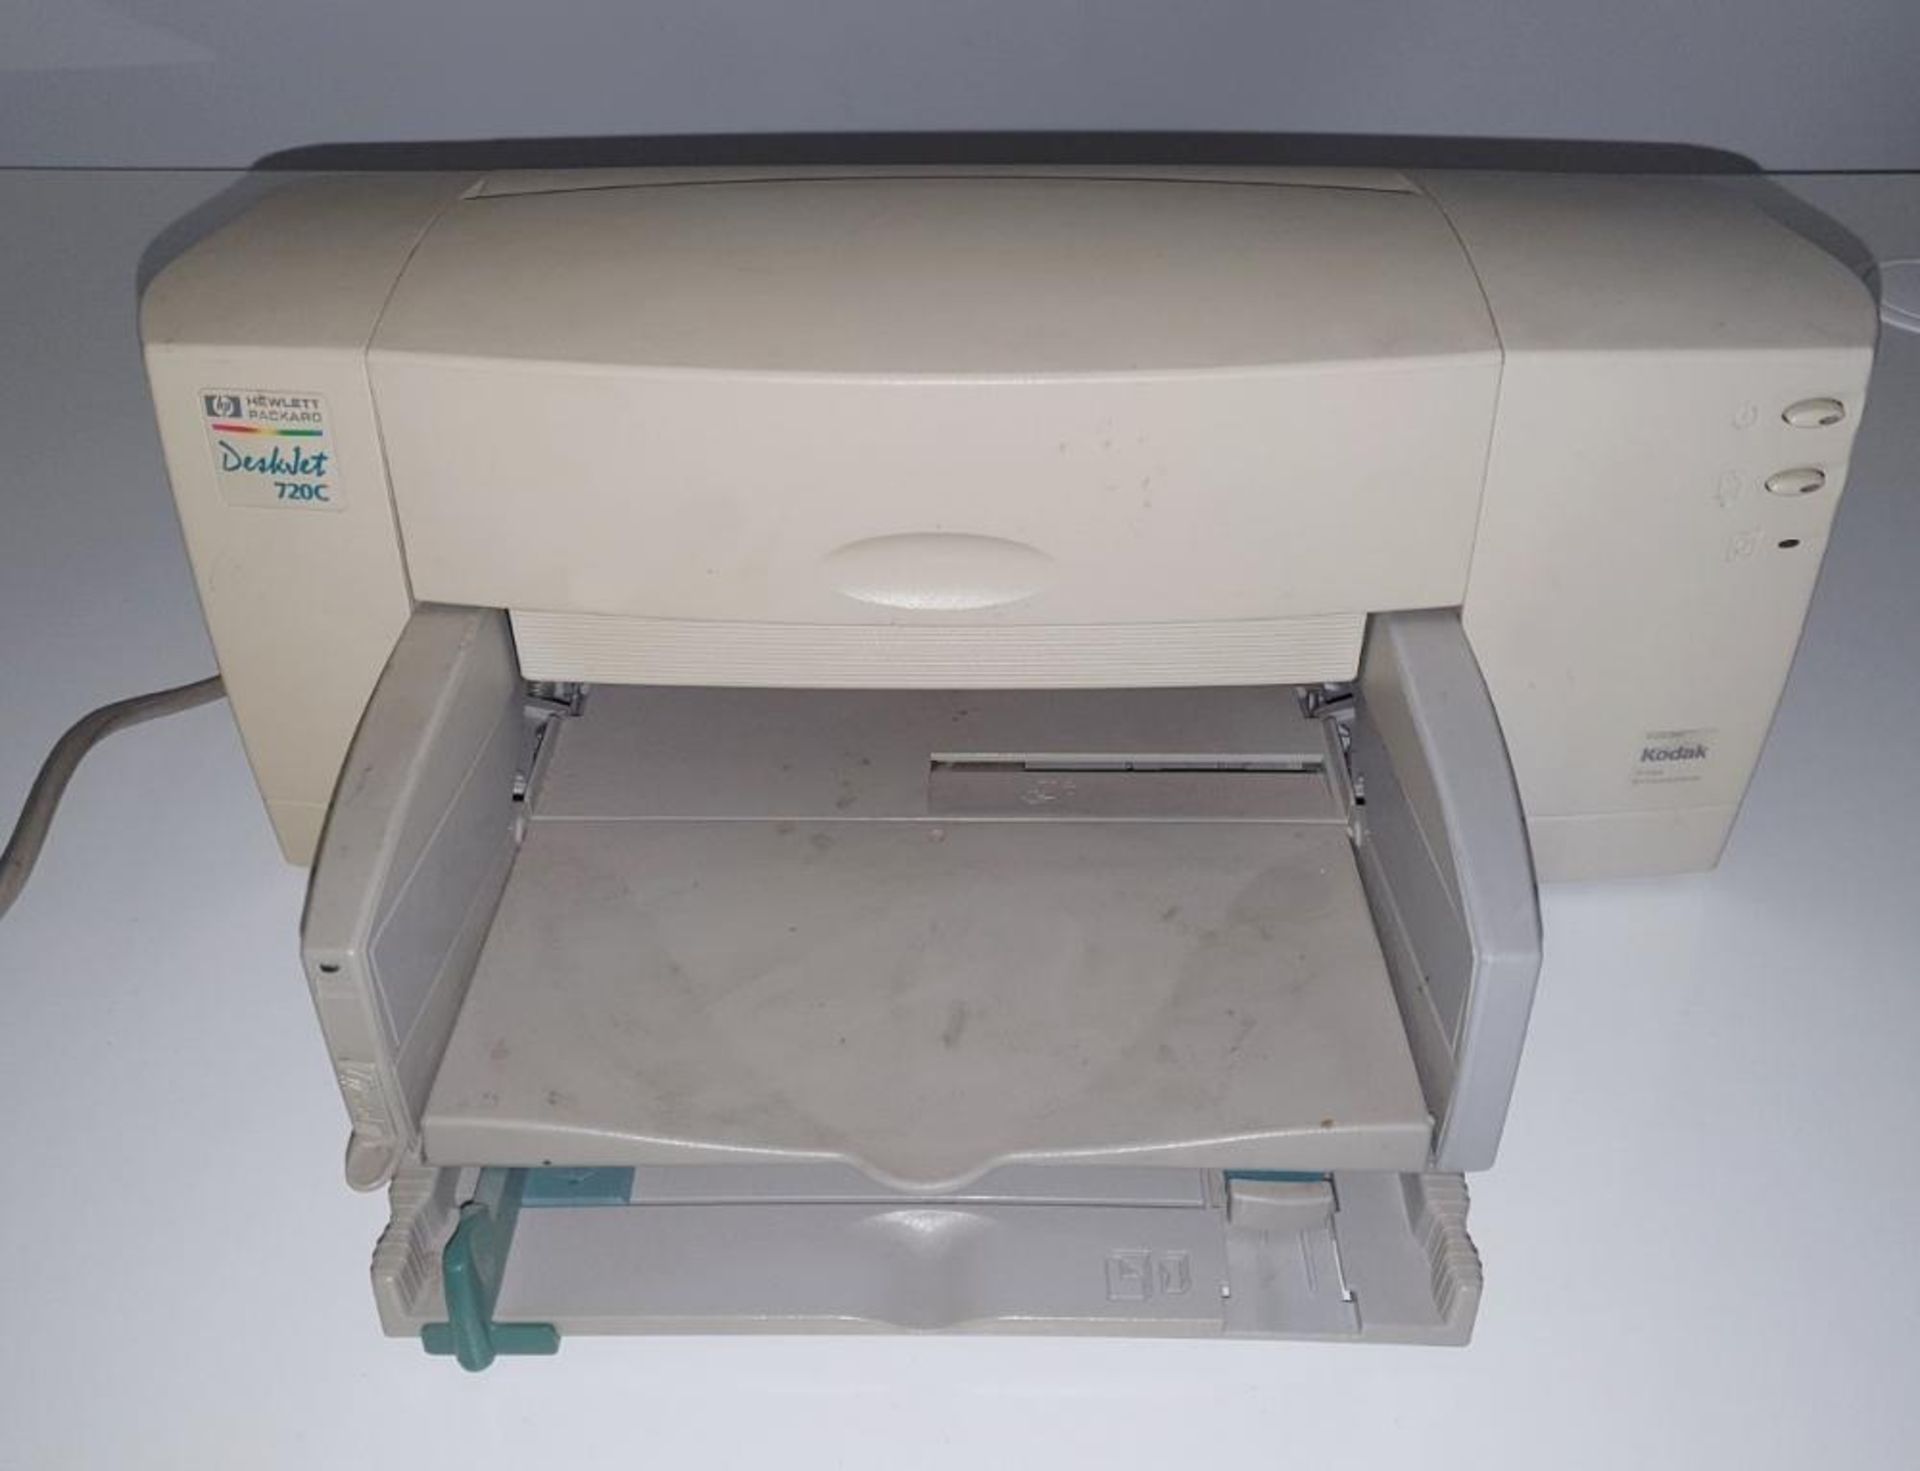 1 x Hewlett Packard DeskJet 720C Printer - CL011 - Location: Altrincham WA14 - Used in Good